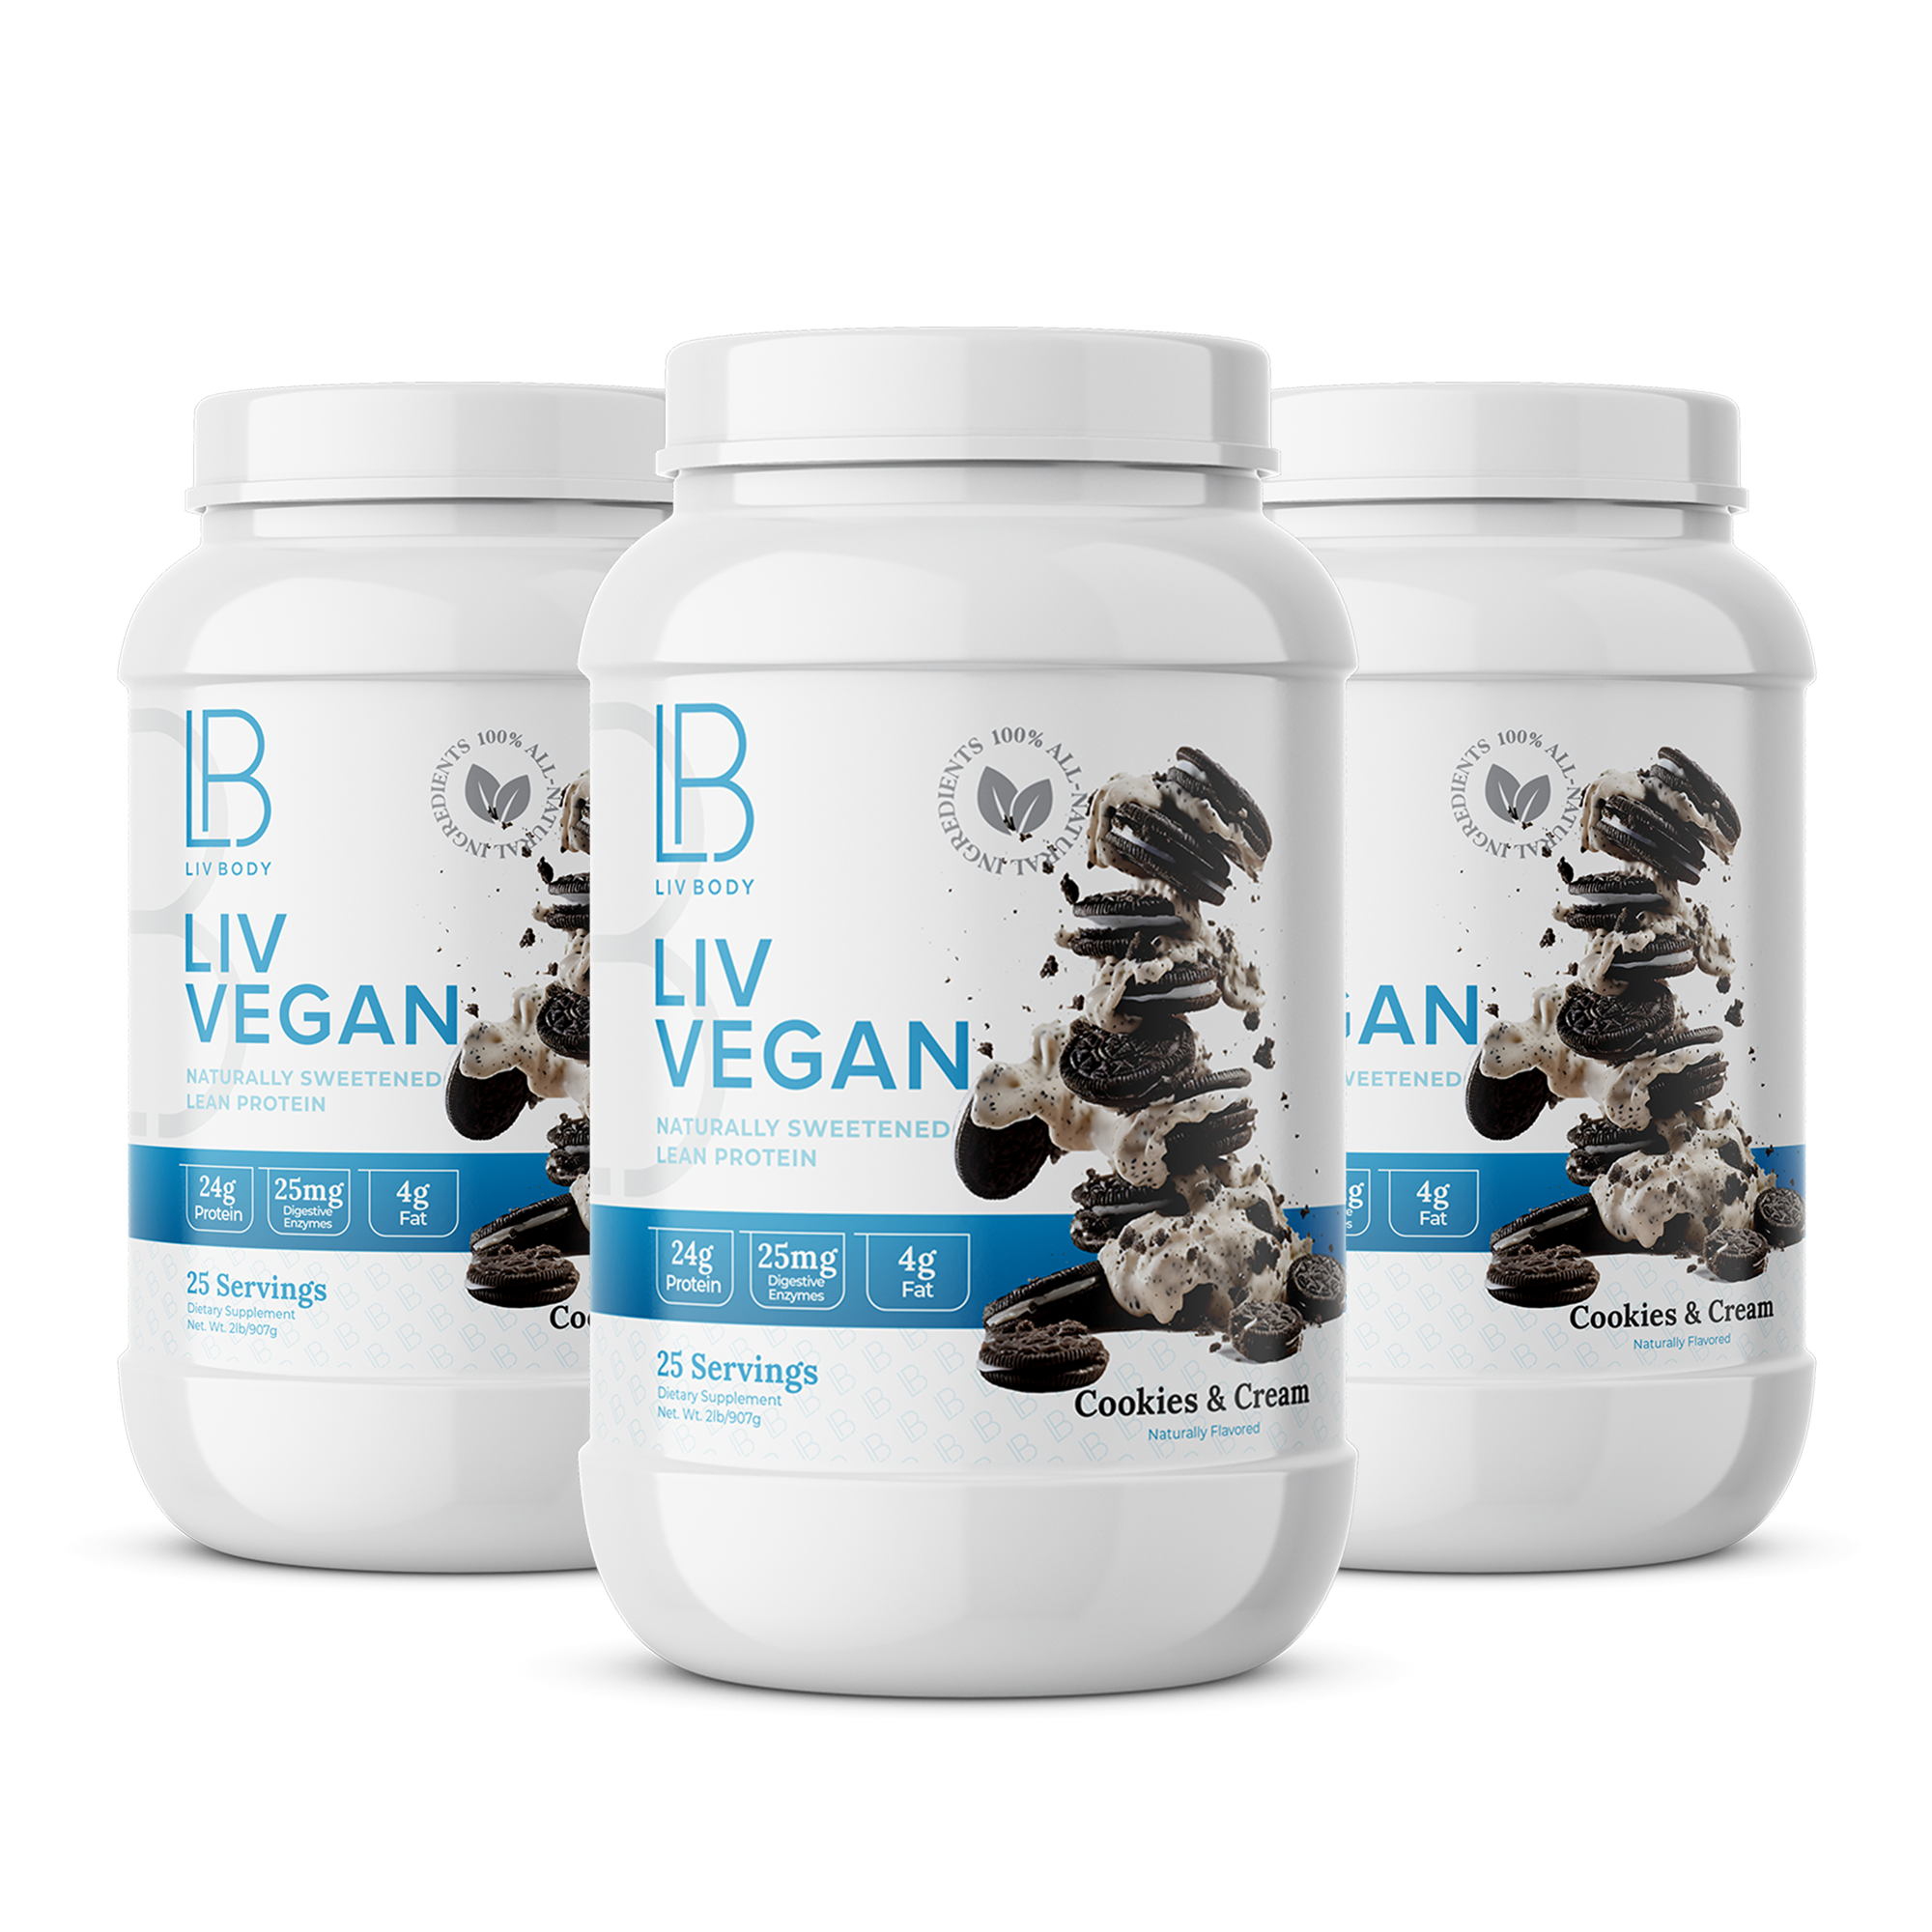 LIV Vegan - Lean Protein 3 Pack